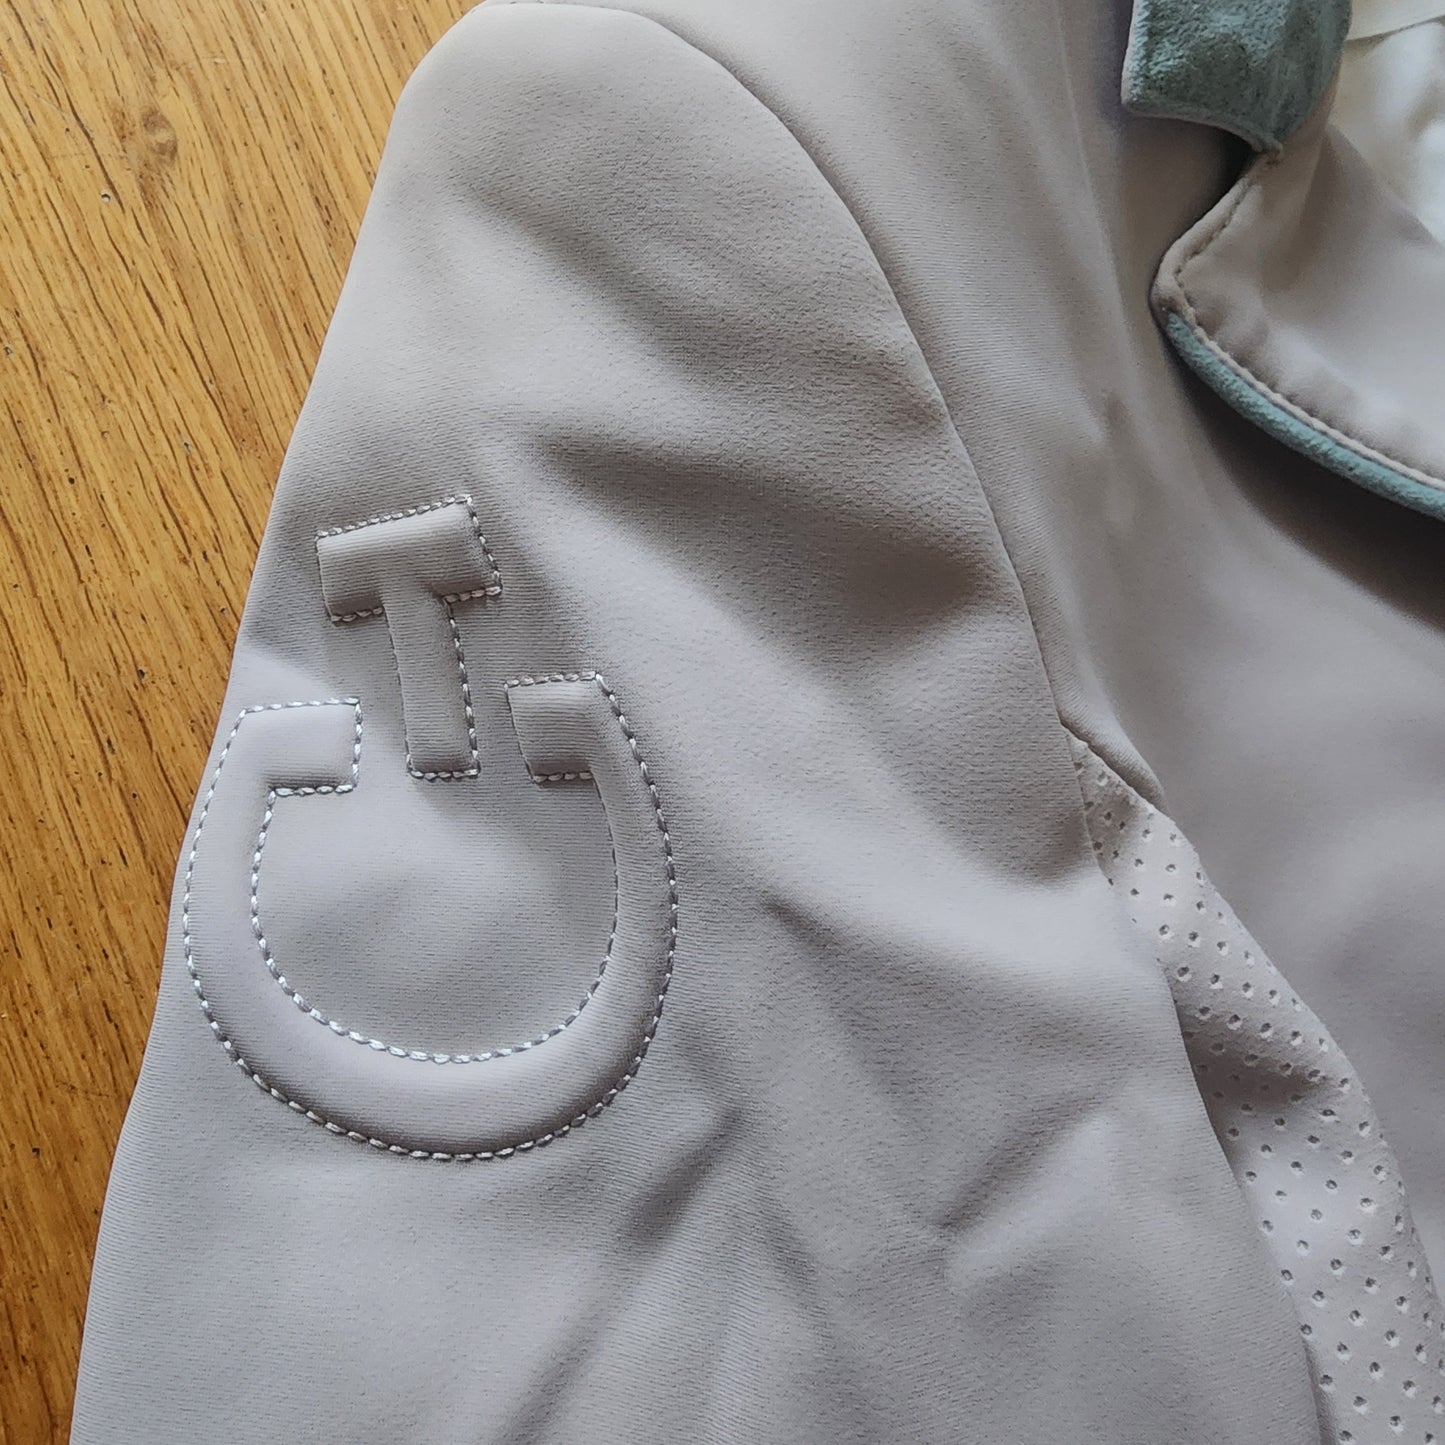 Cavalleria Toscana light grey show jacket with turquoise collar, ladies 10 (Italian 42)